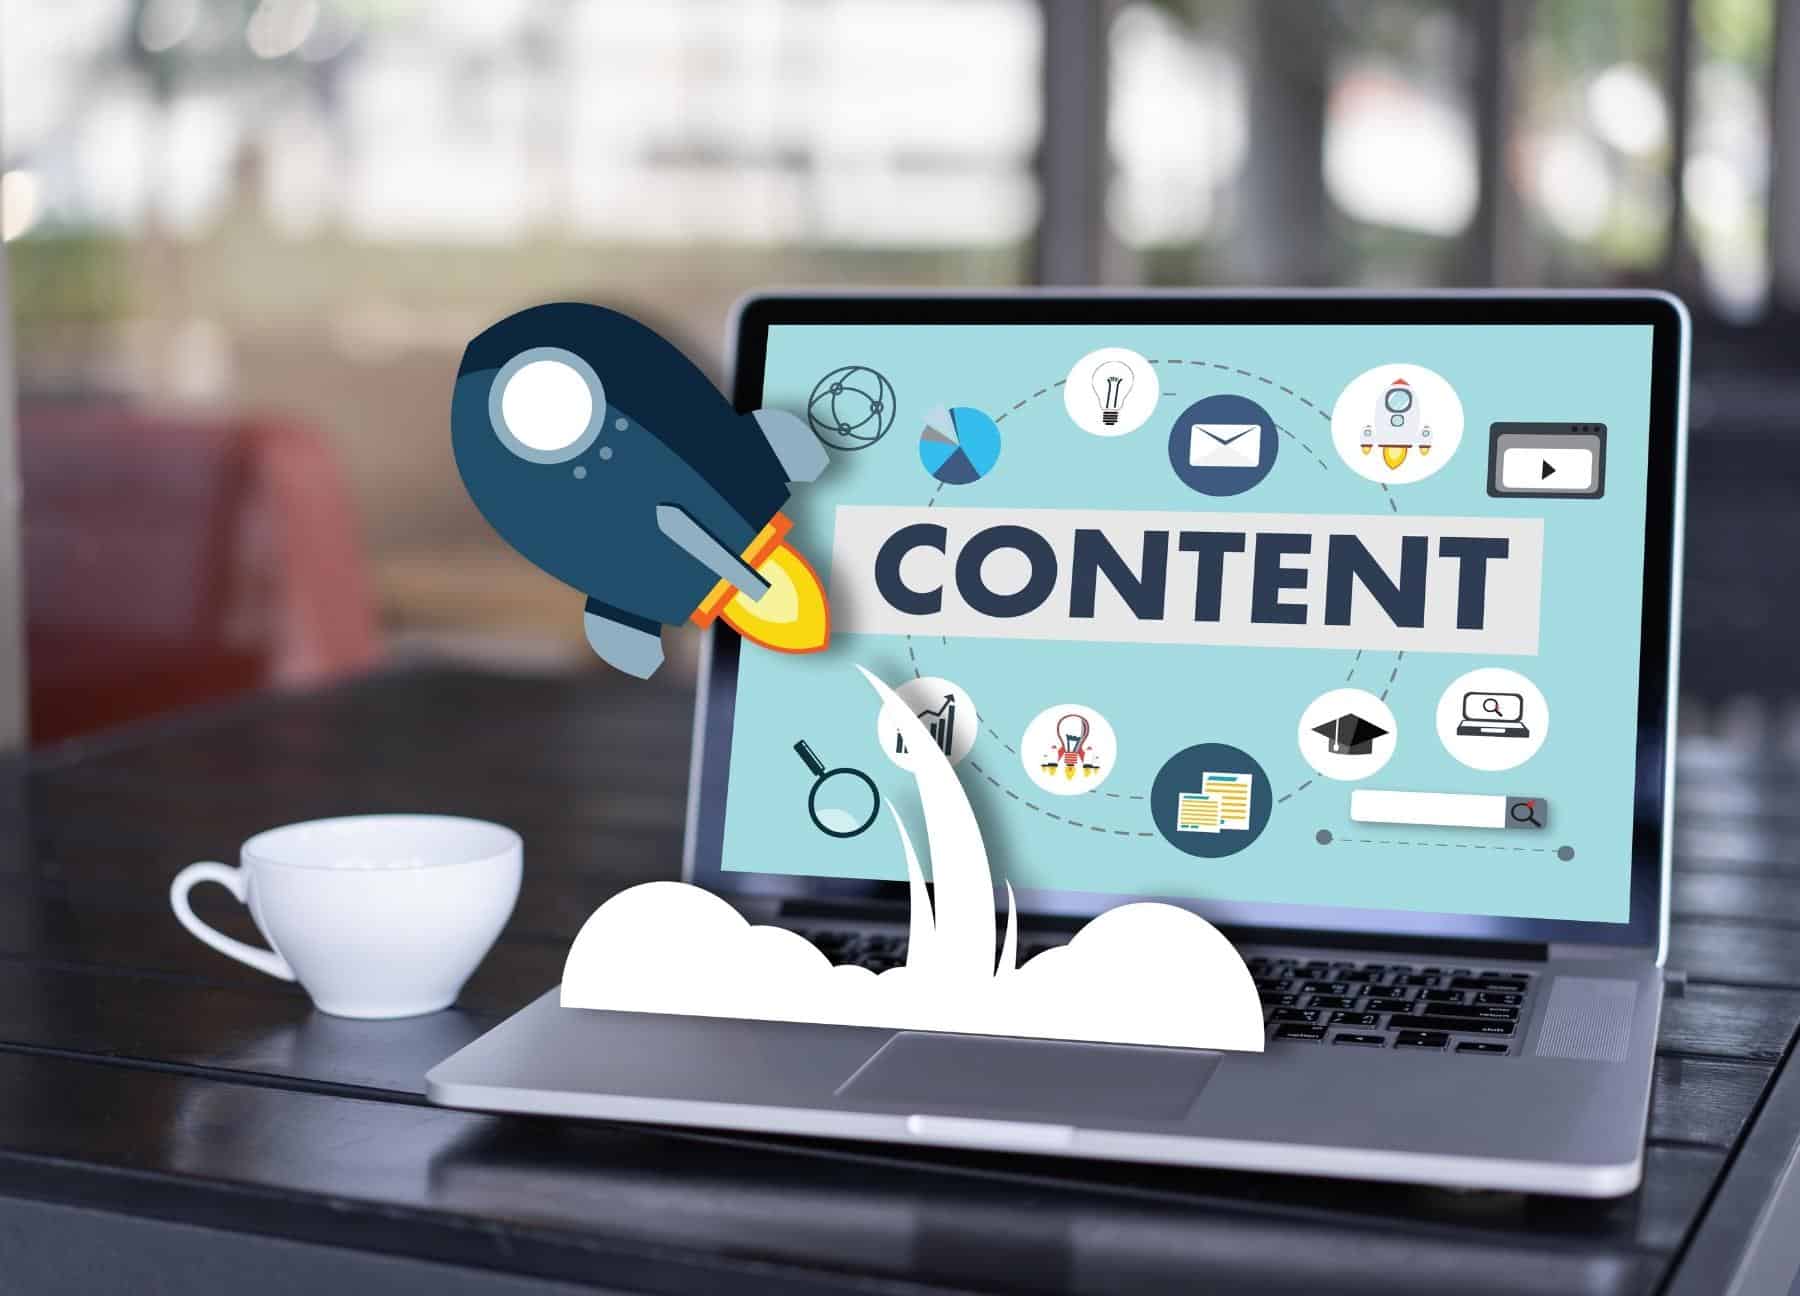 Content Marketing Tipps